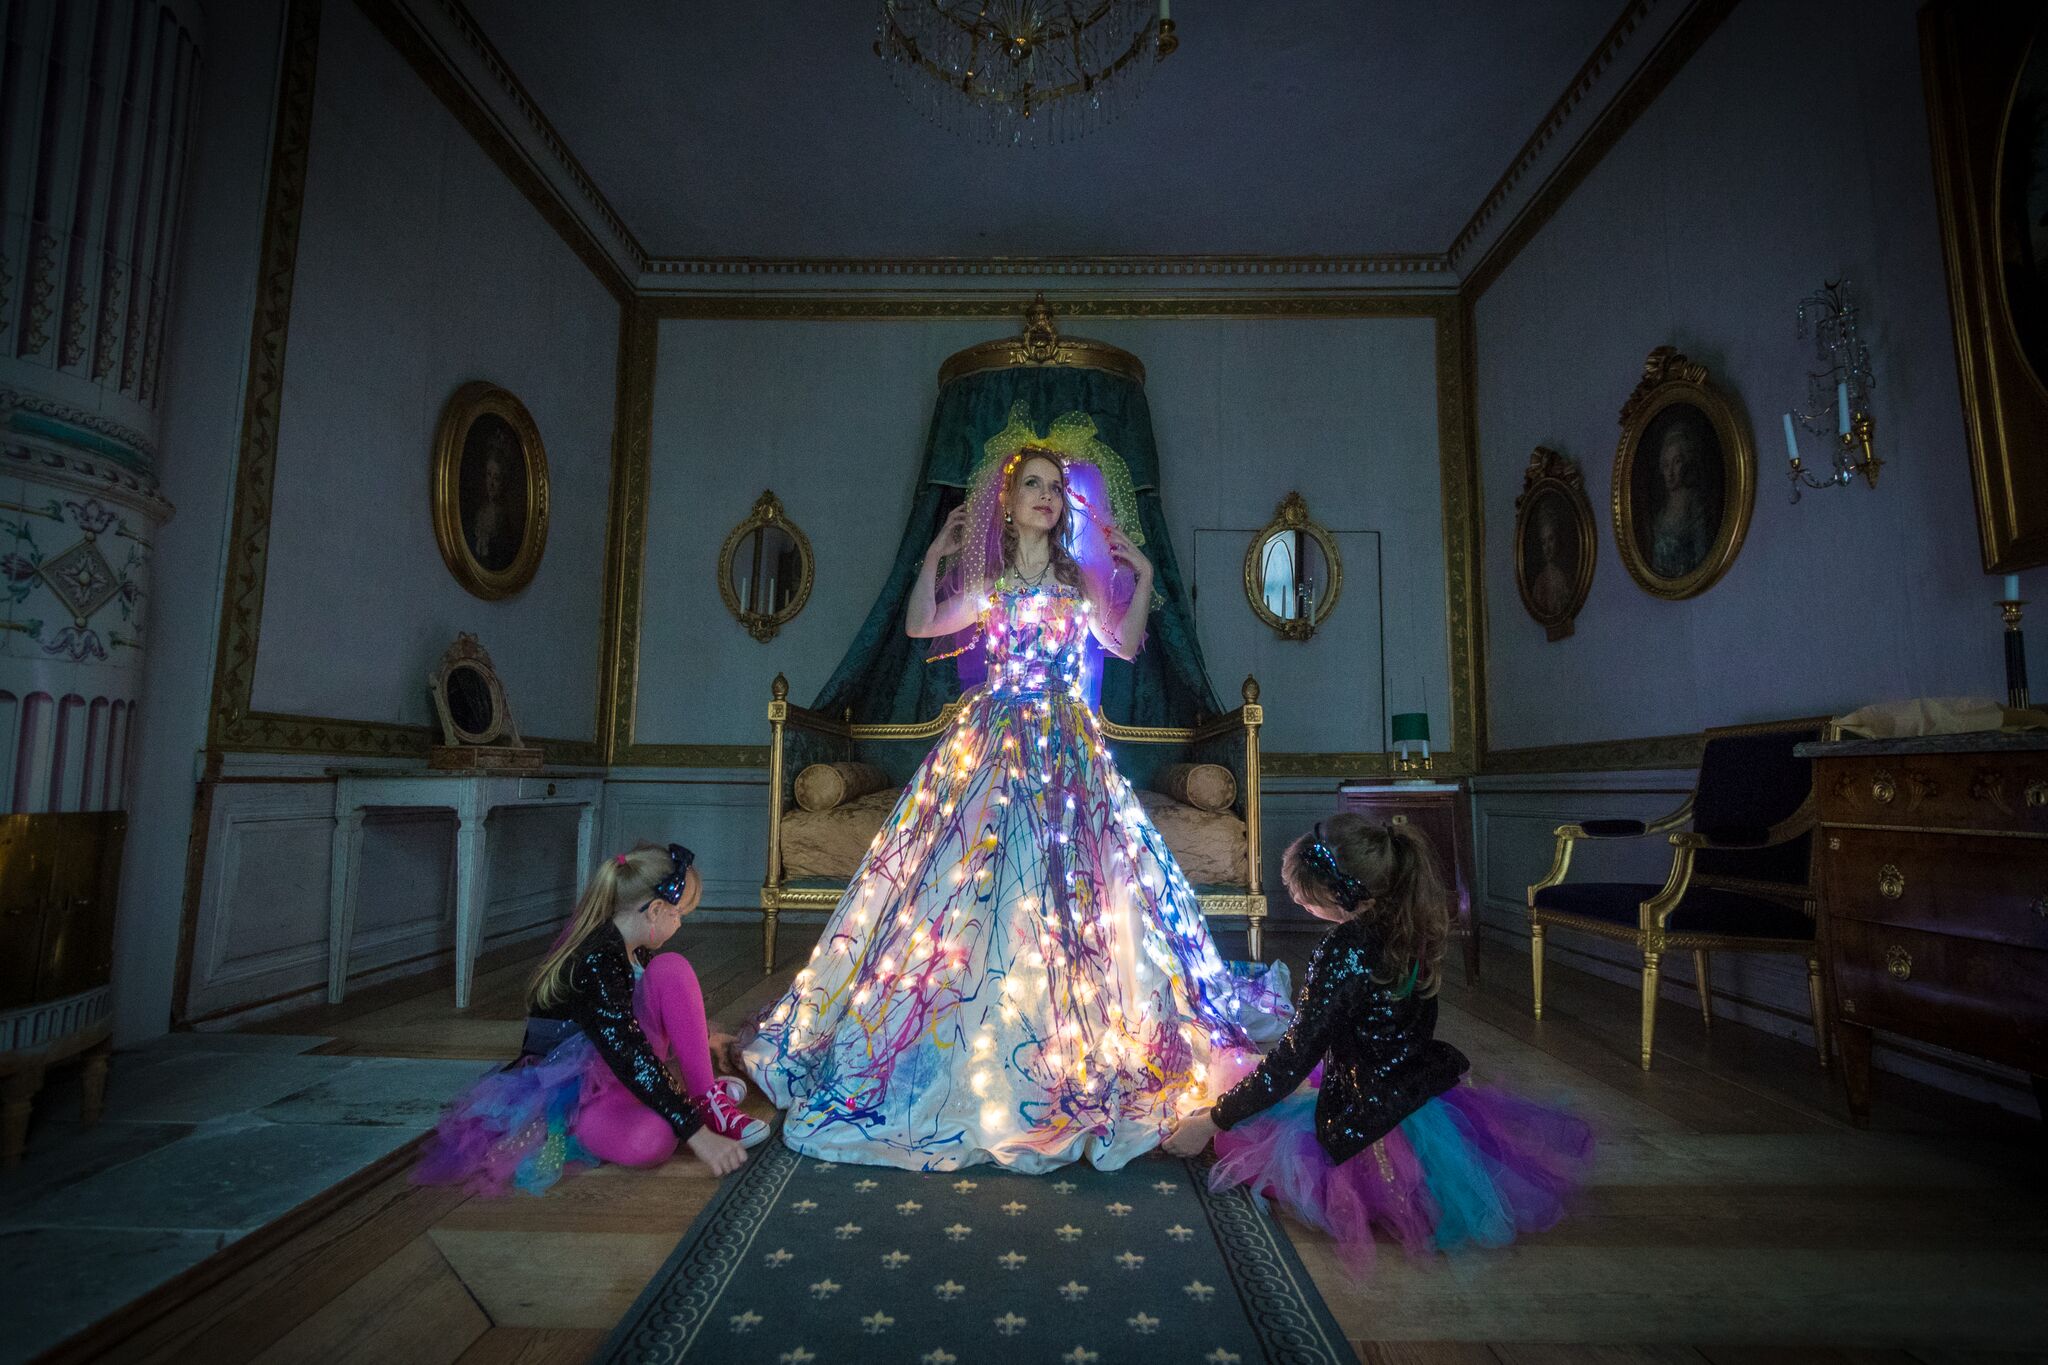 Light up wedding dress at Svartå Manor